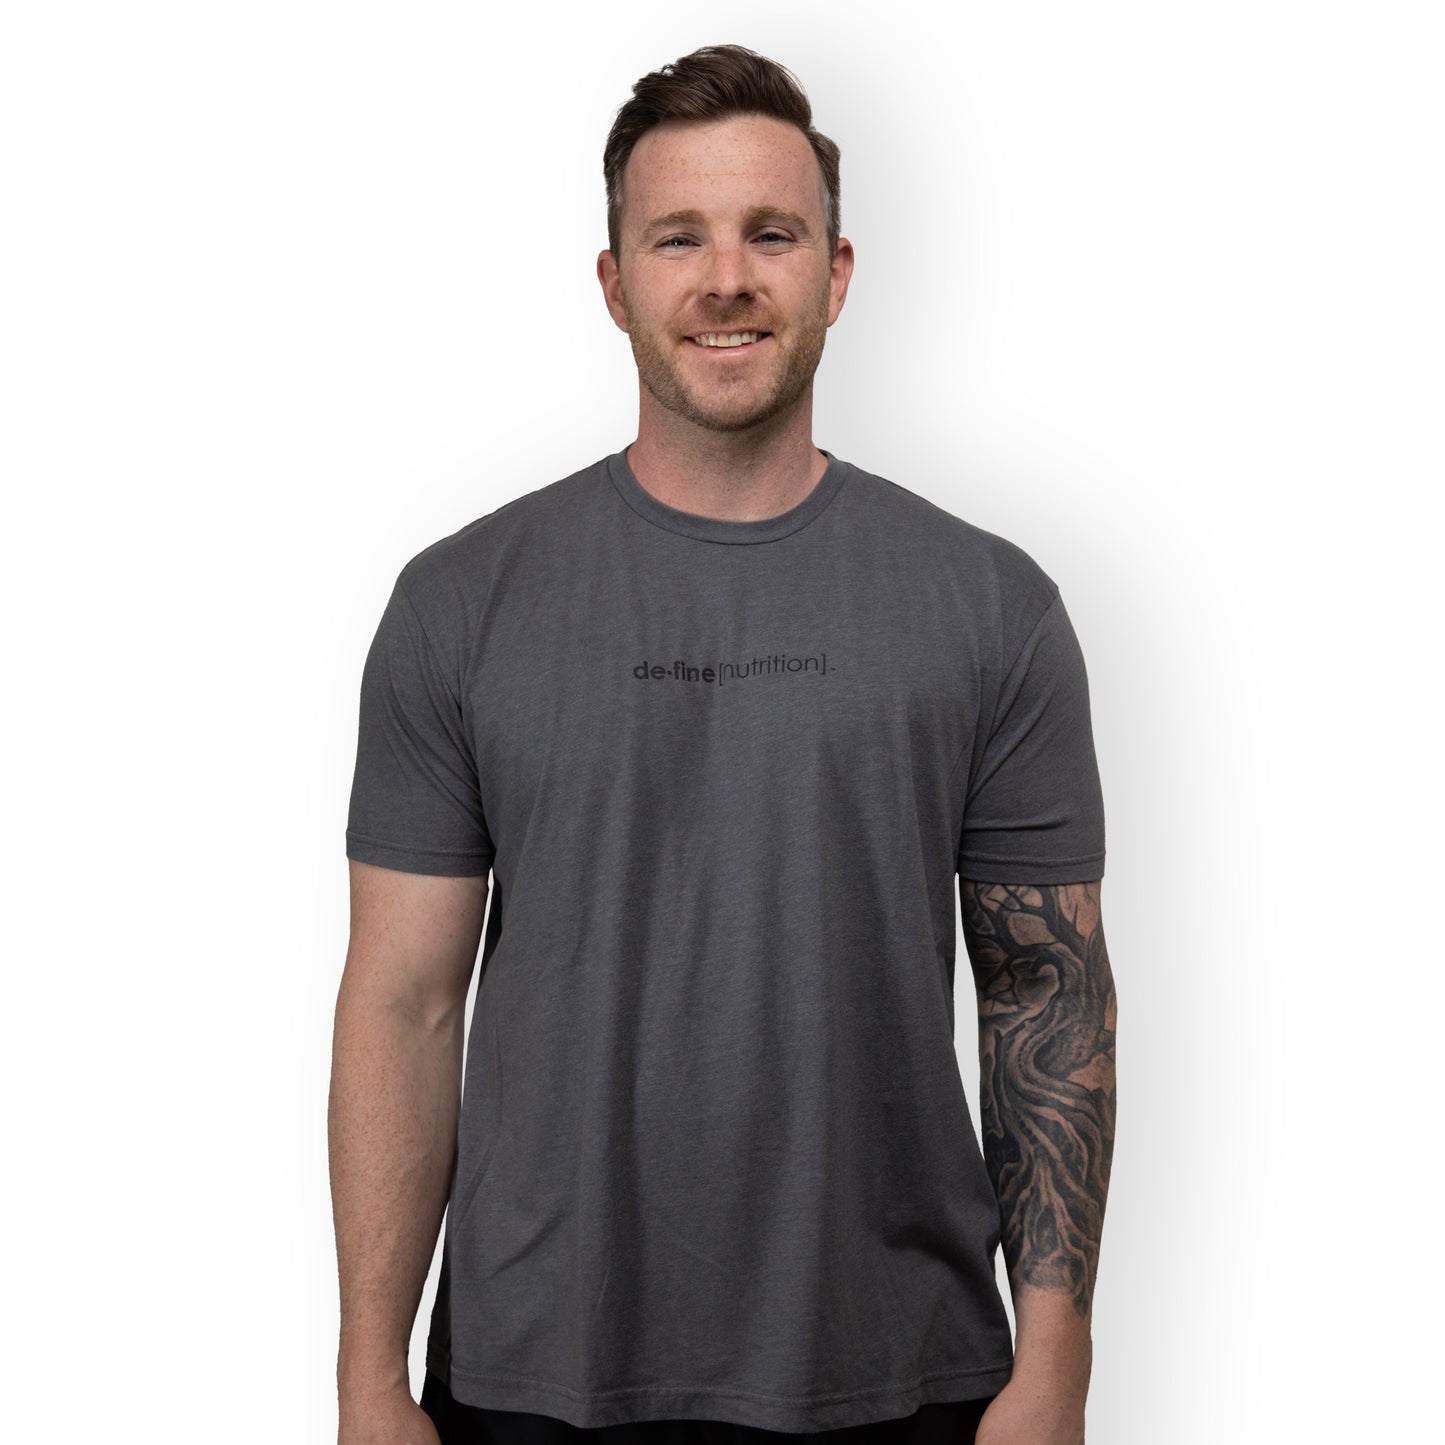 define[shirt] small print grey